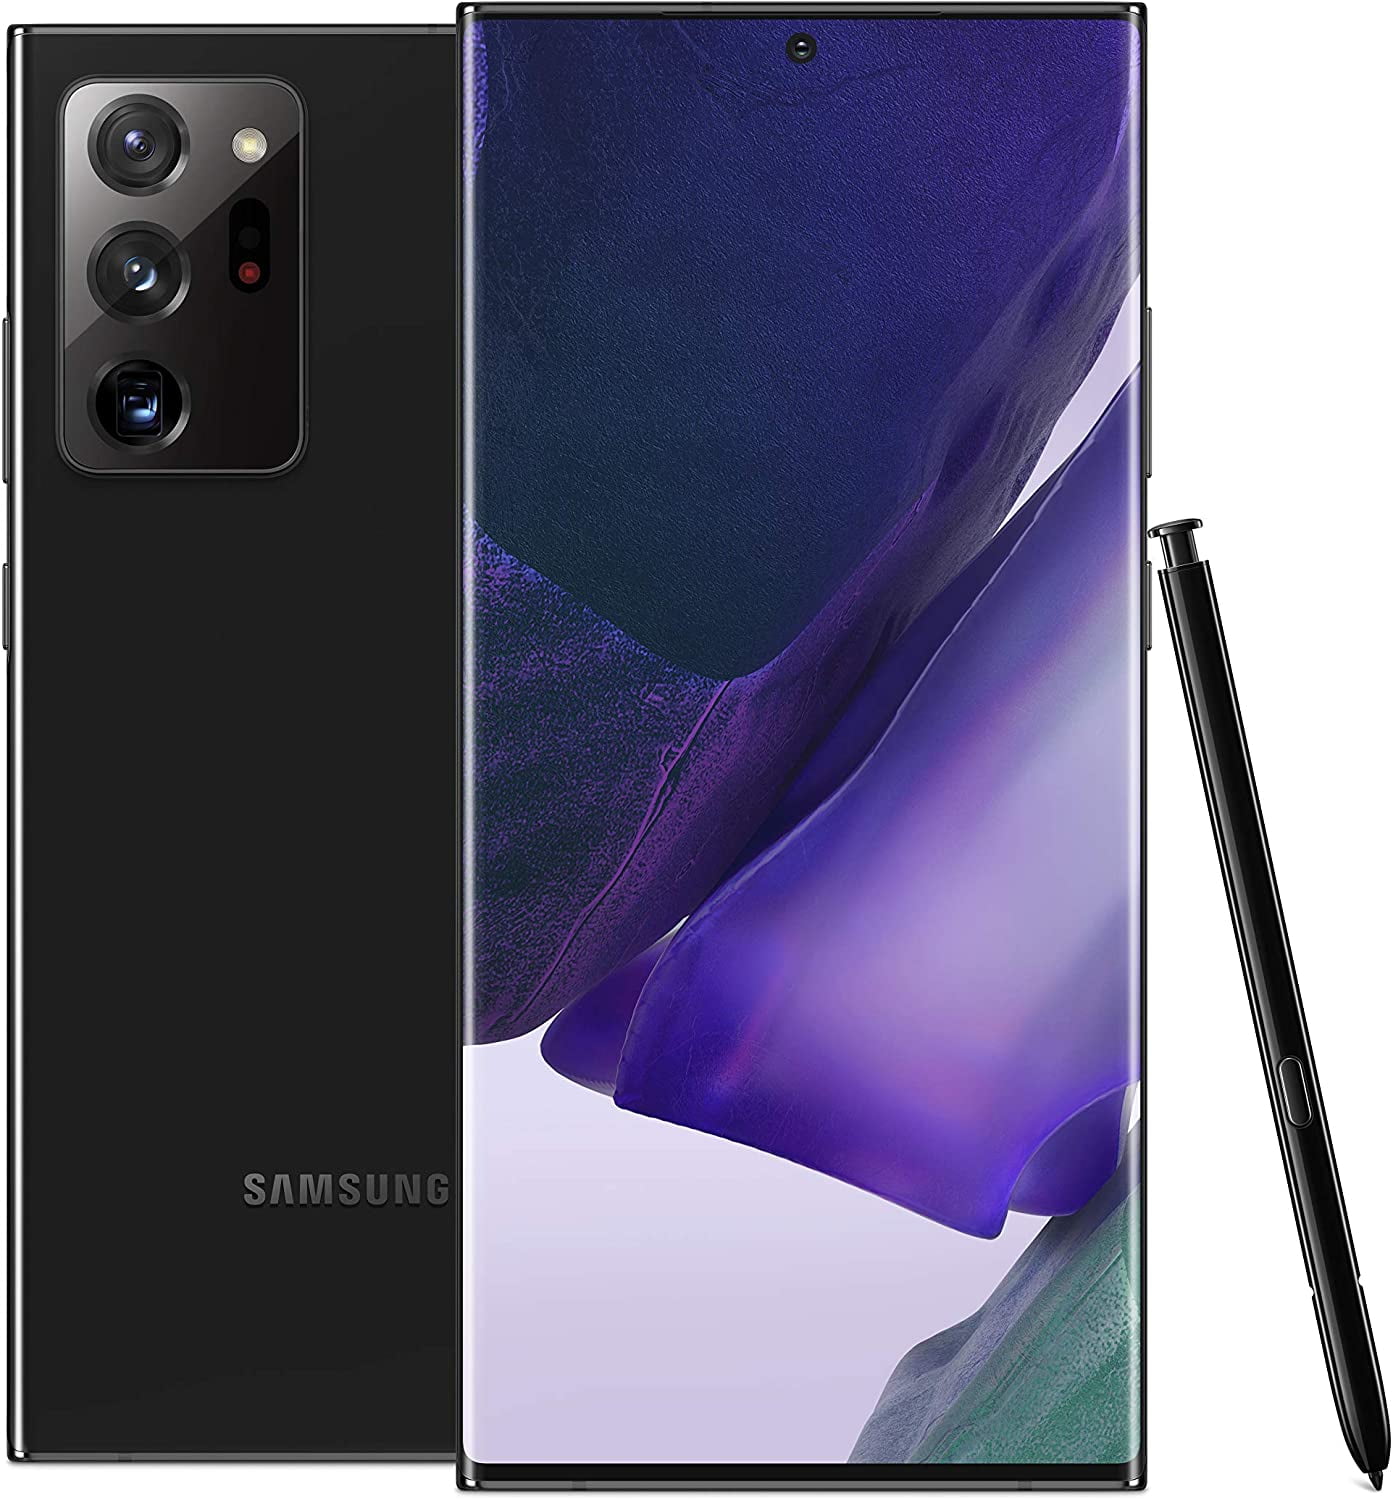 SAMSUNG Galaxy S21 Ultra 5G Factory Unlocked Android Cell Phone 256GB US  Version Smartphone Pro-Grade Camera 8K Video 108MP High Res, Phantom Black